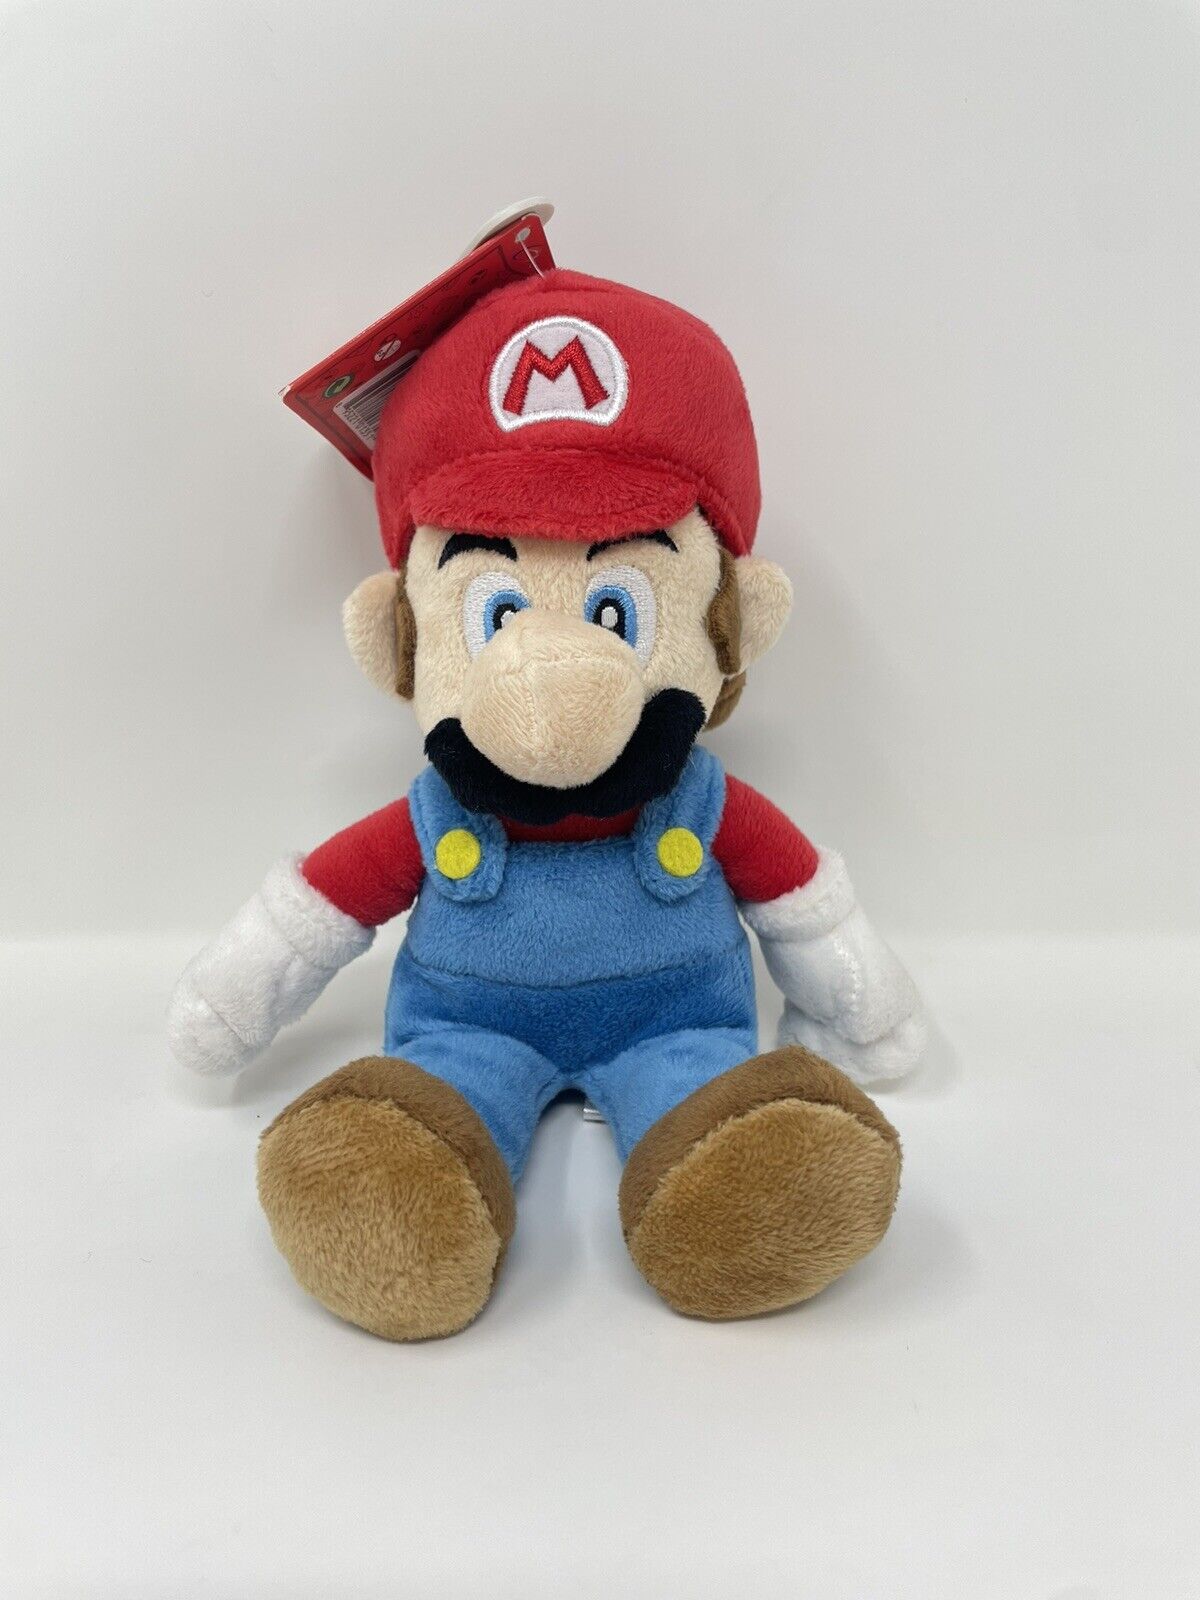 Nintendo Super Mario Bros. Wii Mario Plush Toy 22cm 2010 BRAND NEW